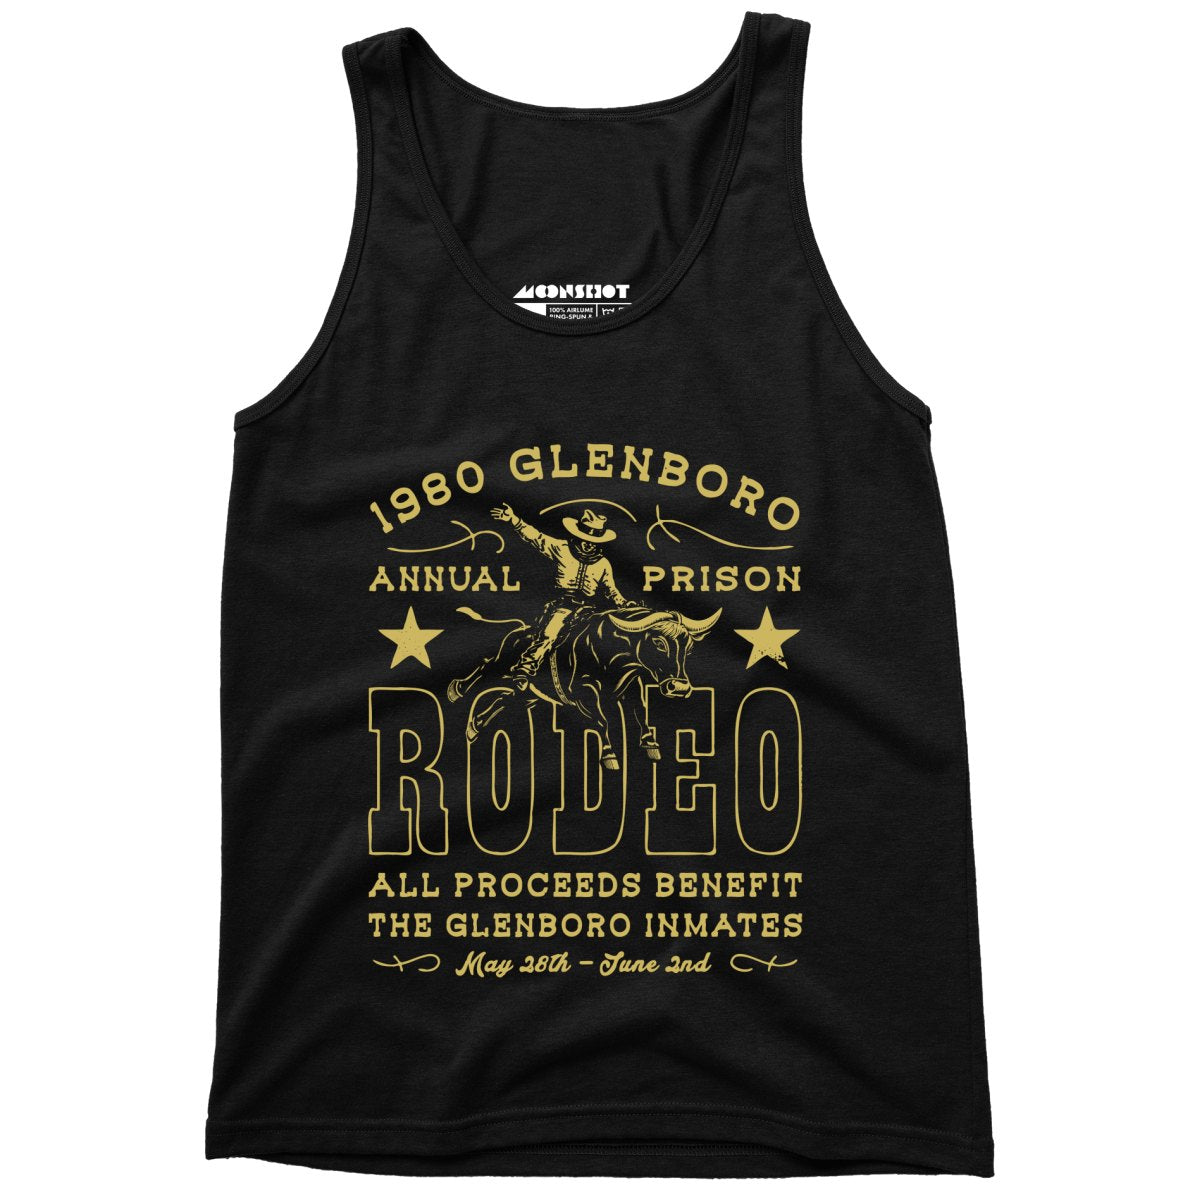 1980 Glenboro Annual Prison Rodeo - Unisex Tank Top